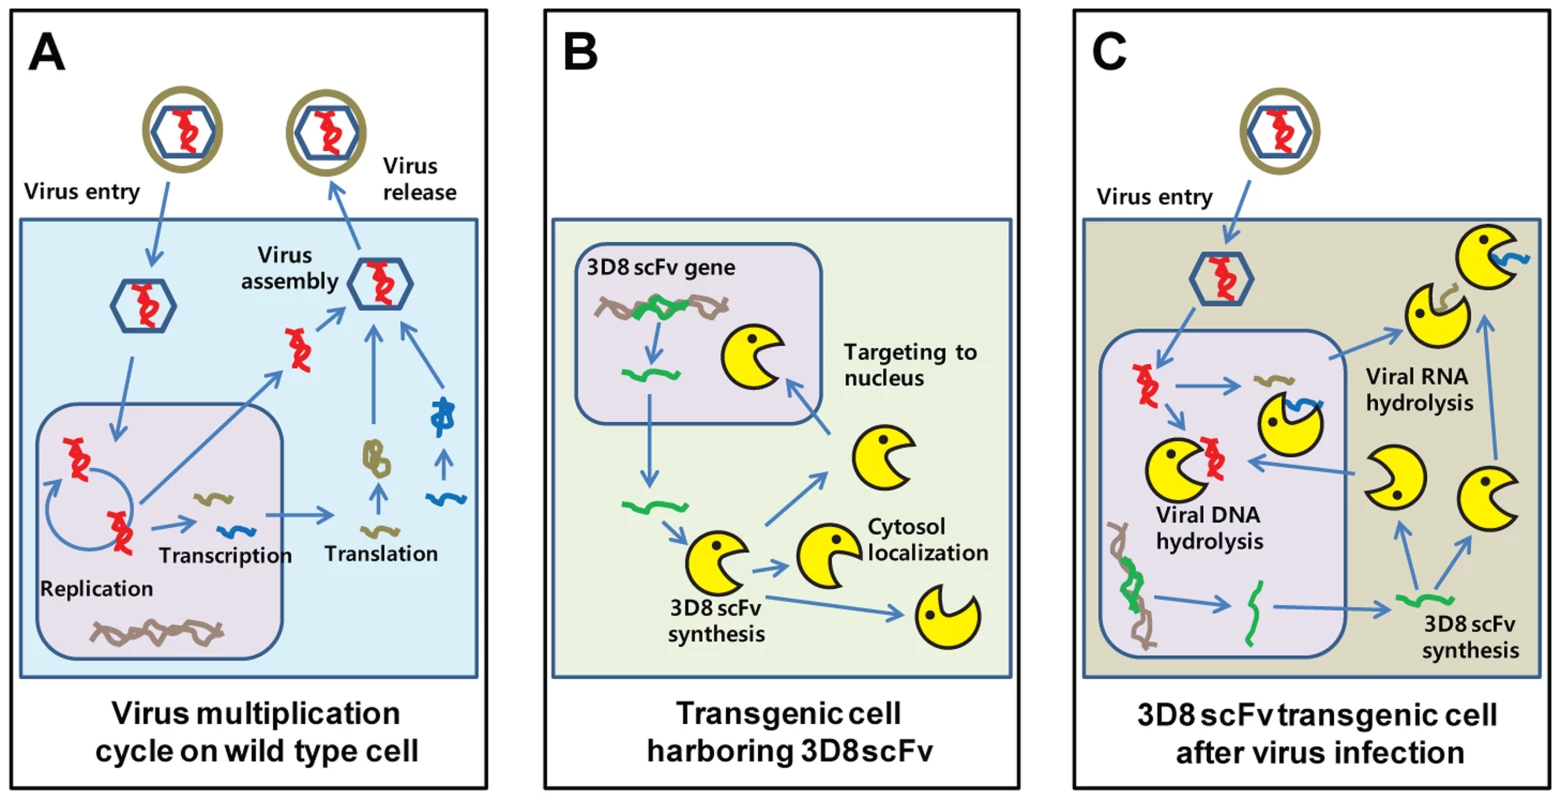 New antiviral mechanism by 3D8 scFv protein.